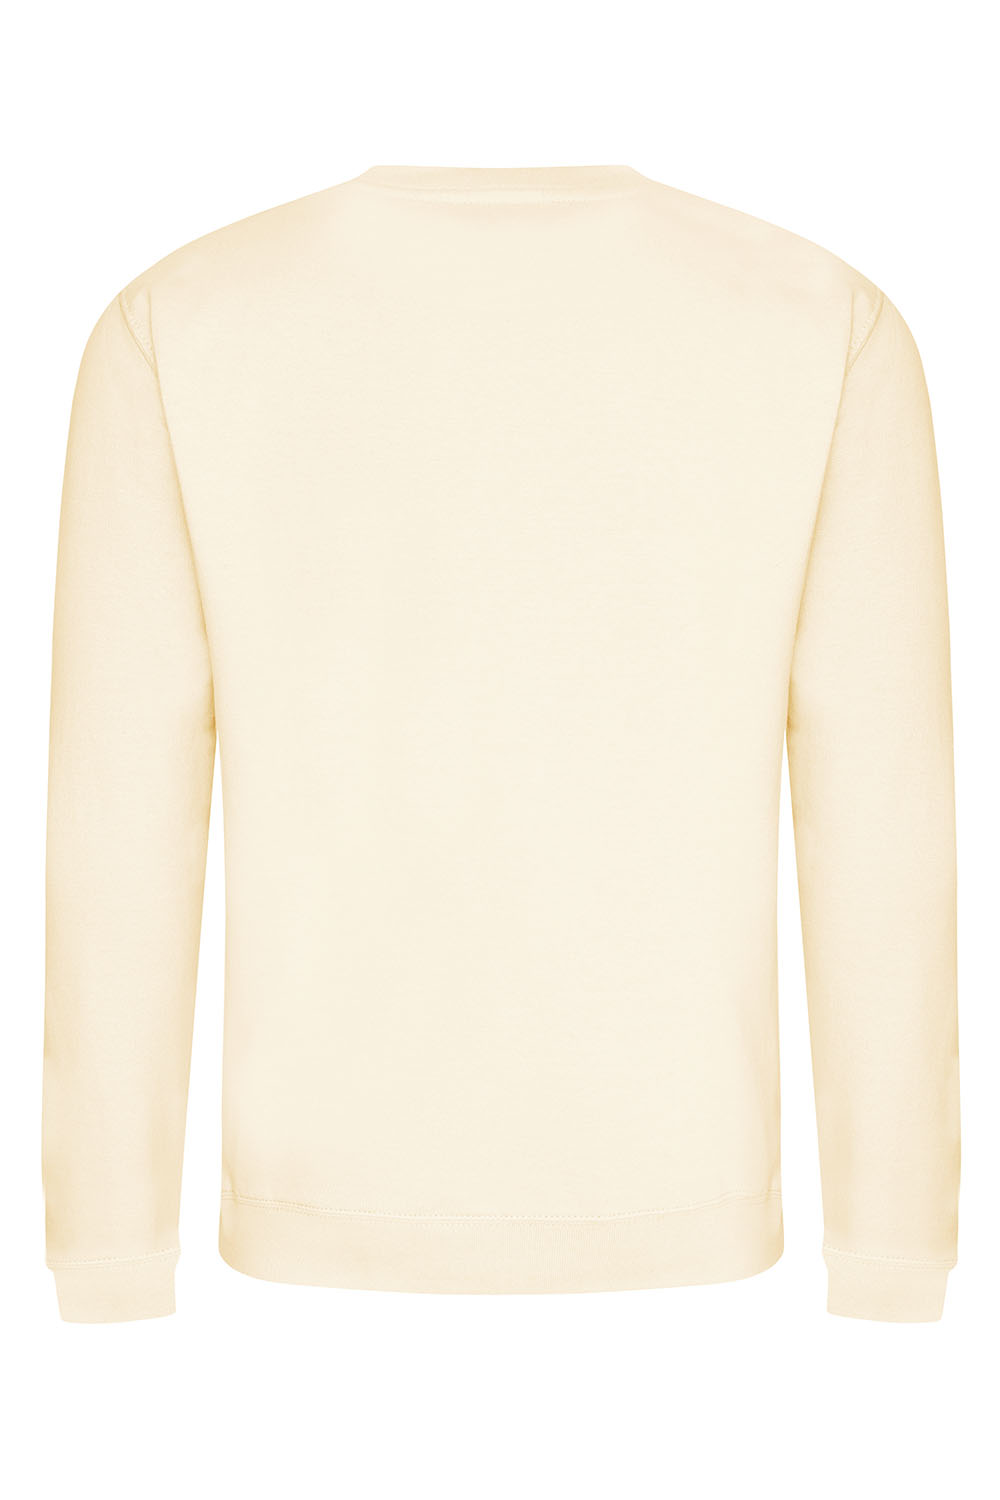 Happy Soul Sweatshirt In Vanilla (Custom Pack)